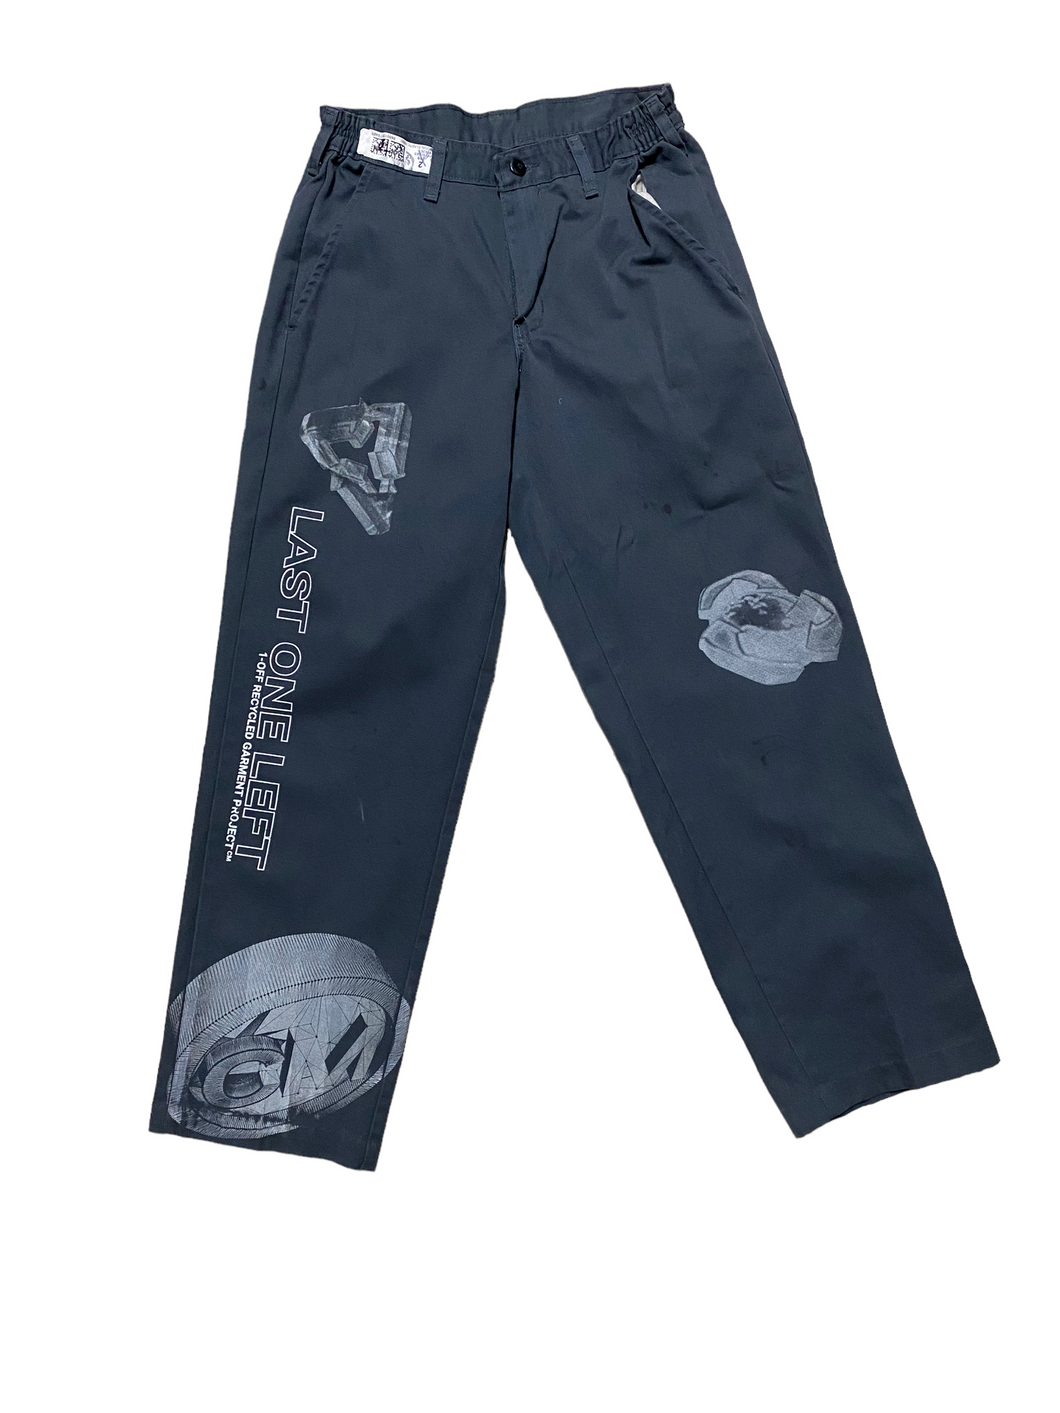 Charcoal work pants (30x30)